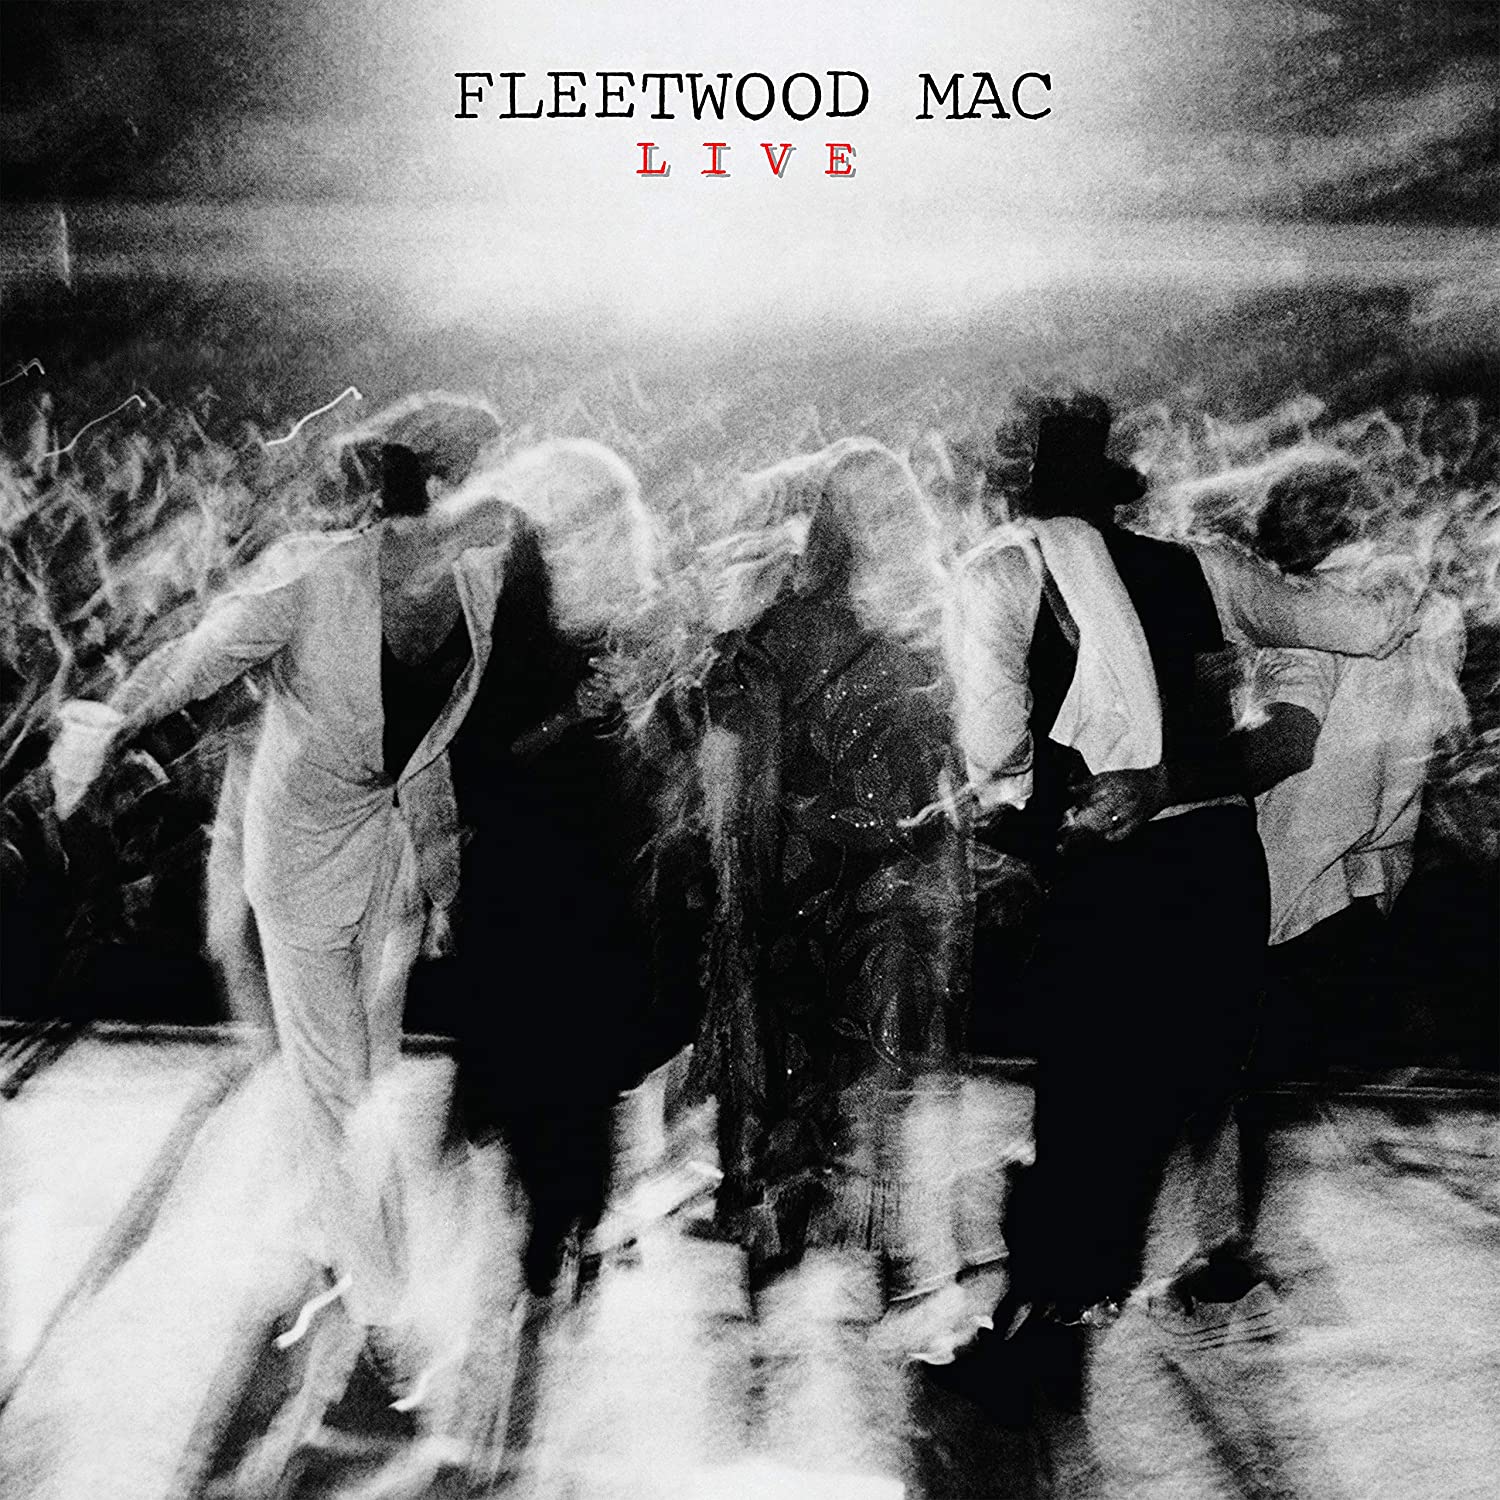 Fleetwood Mac - Live (Deluxe Edition) [1980] 3cd NZBOnly